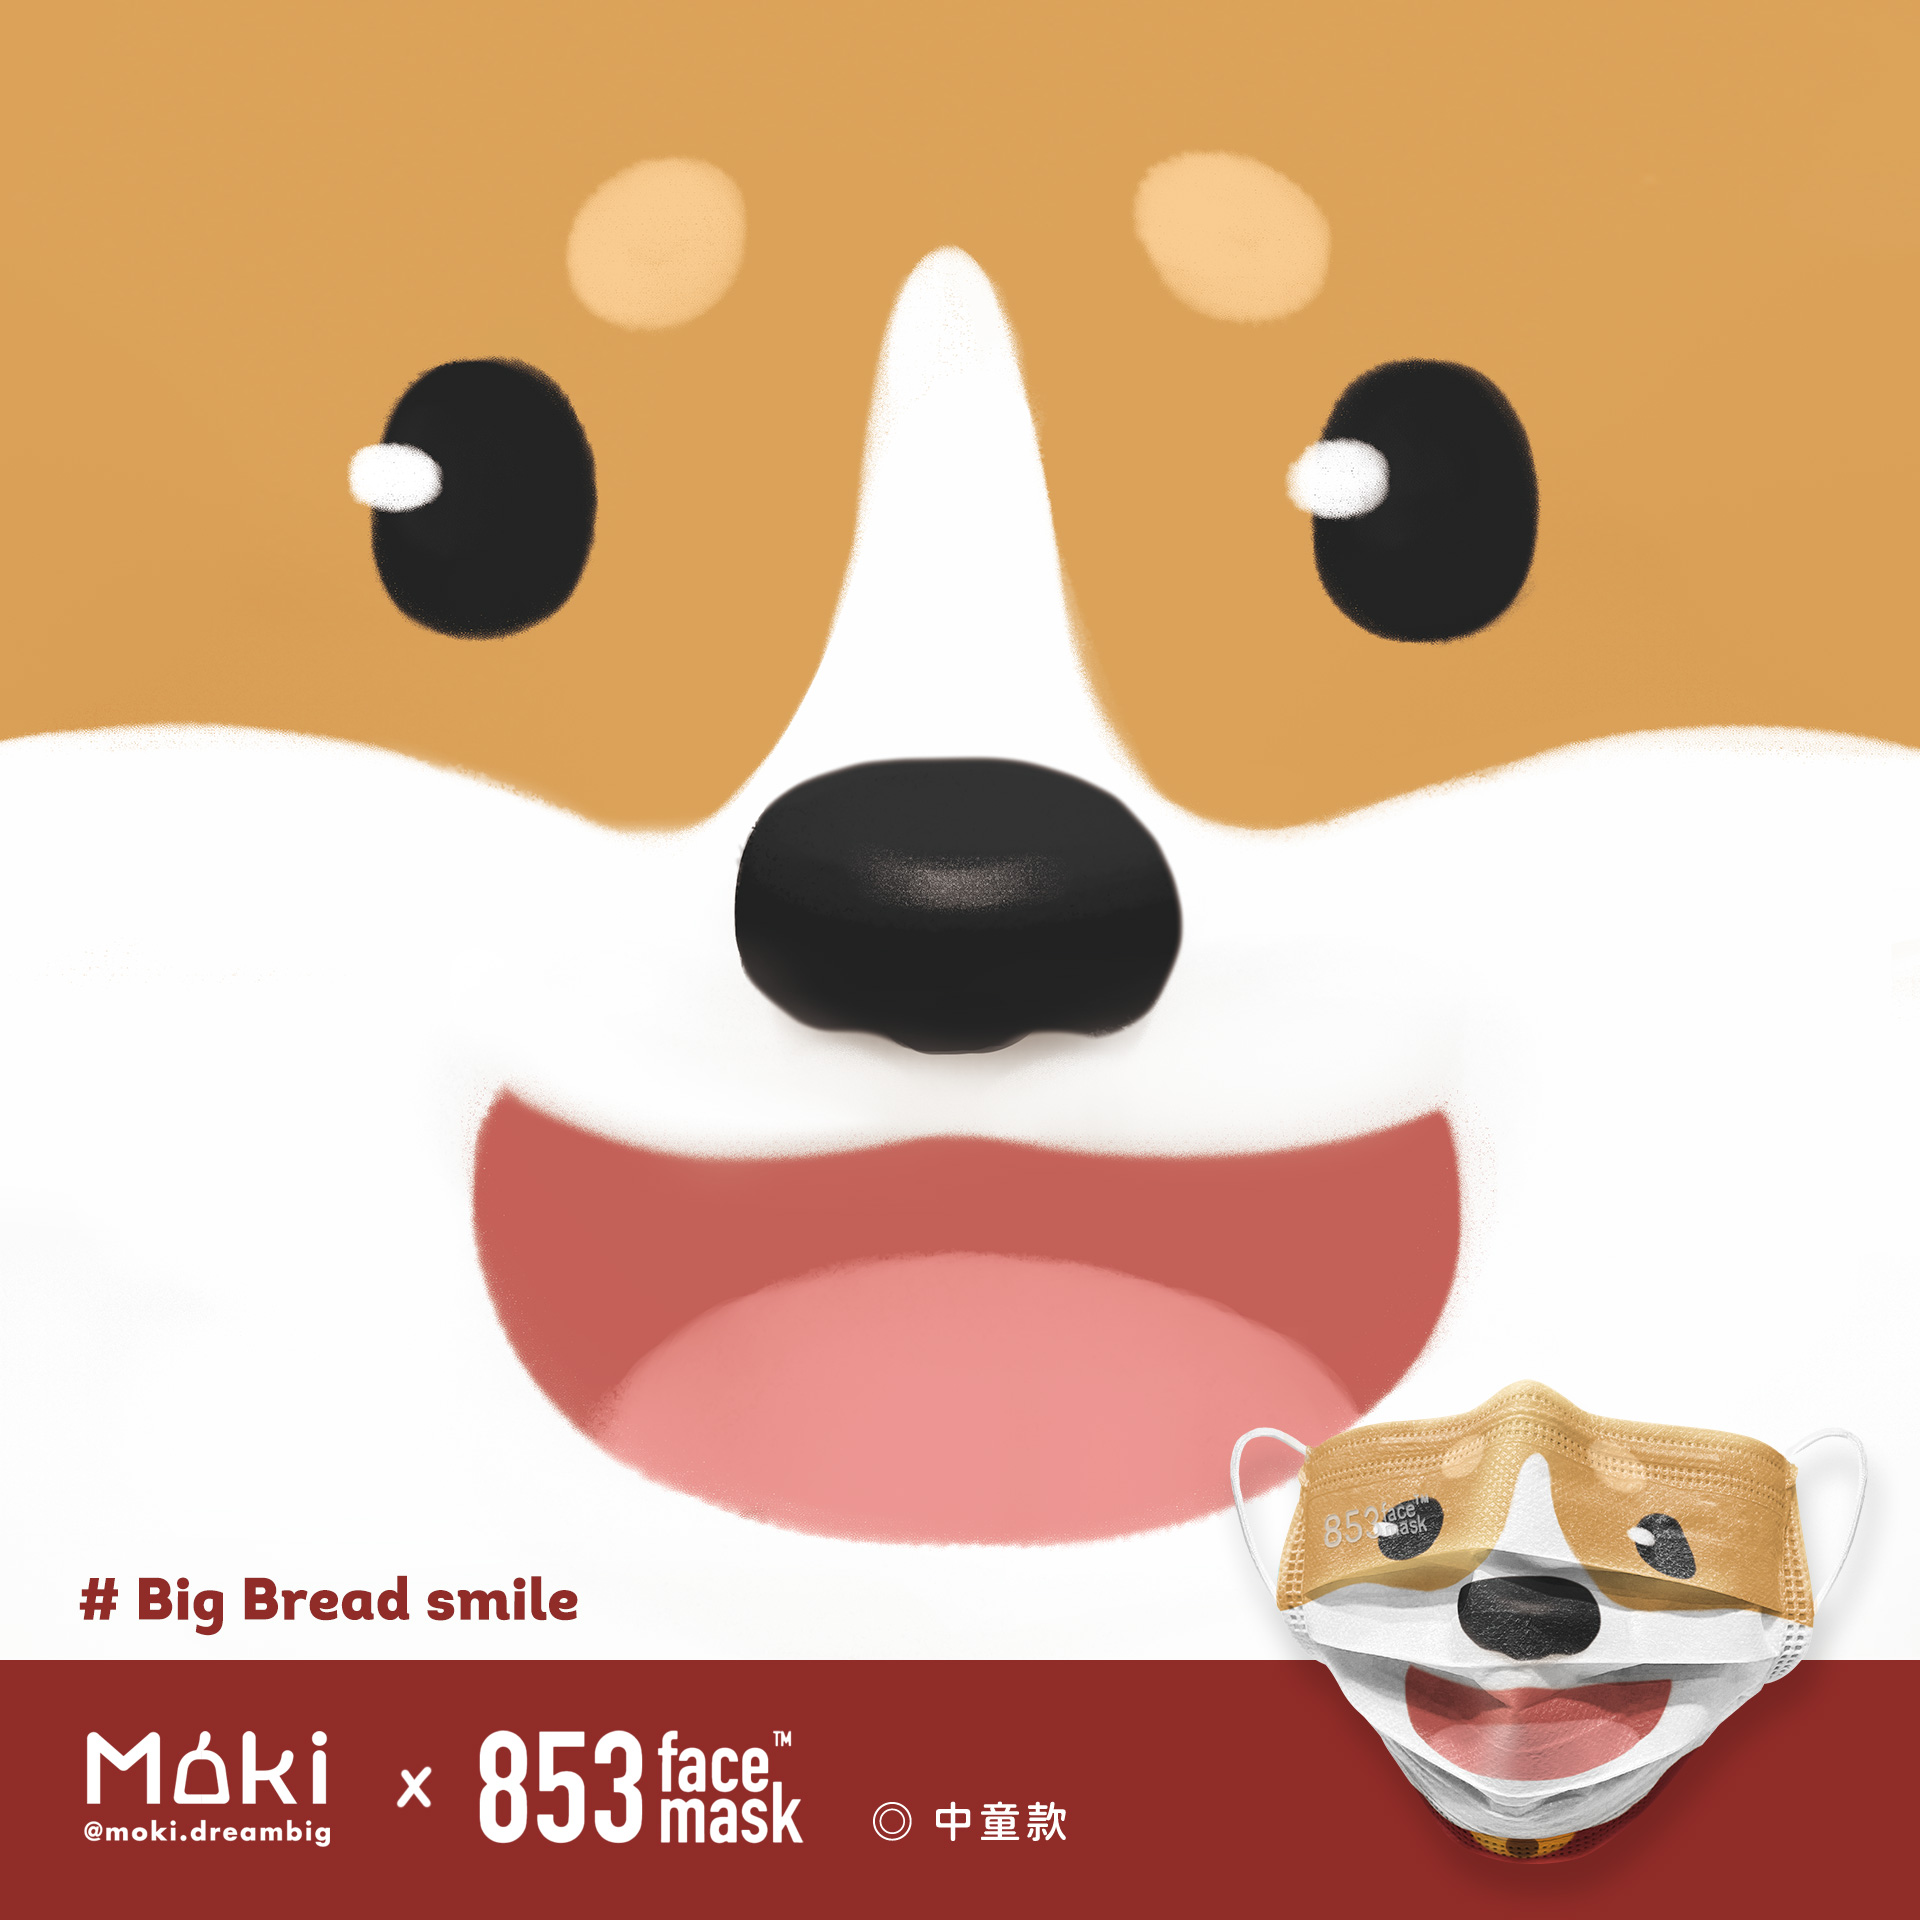 ASTM Level 3 145mm中童口罩（853 Face Mask™️ X moki.dreambig) Big Bread Smile 非獨立包裝10片